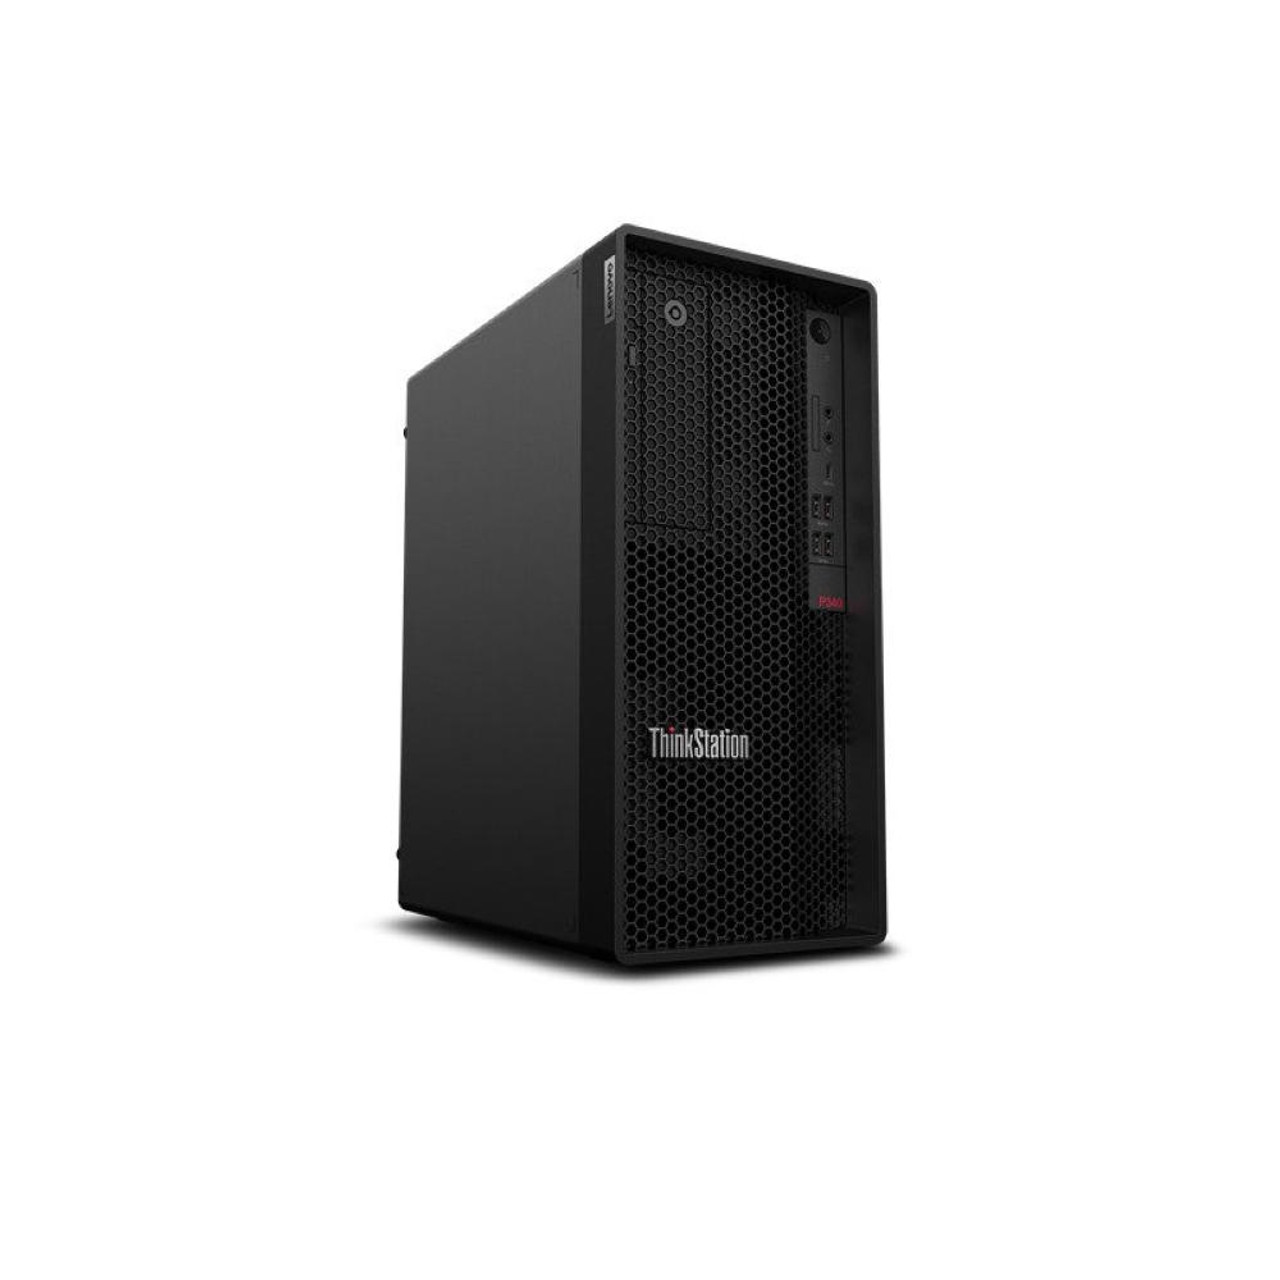 Lenovo Thinkstation P340 Tower  PC i7-10700 Quadro P1000 16GB 512GB SSD W10P | 30DHS0B000 | Manufacturer Refurbished